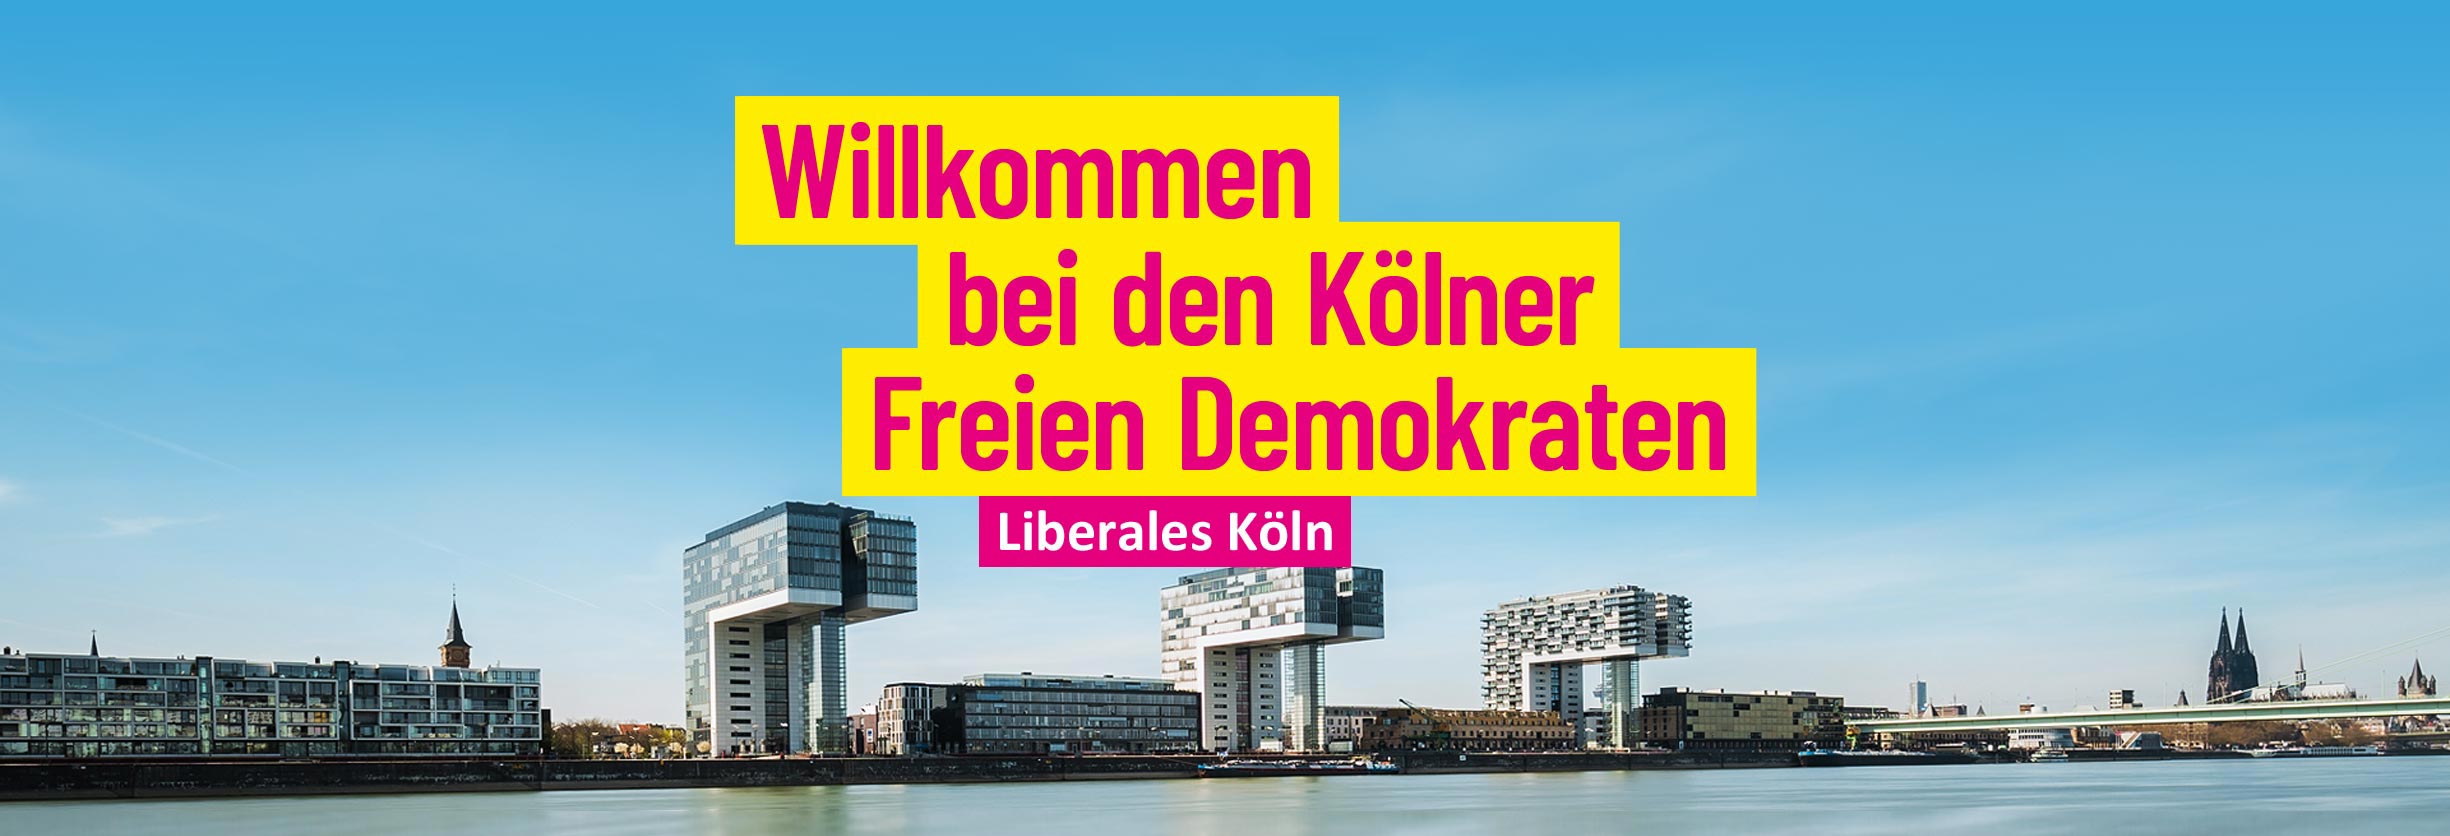 Willkommen bei den Kölner Freien Demokraten. Liberales Köln.